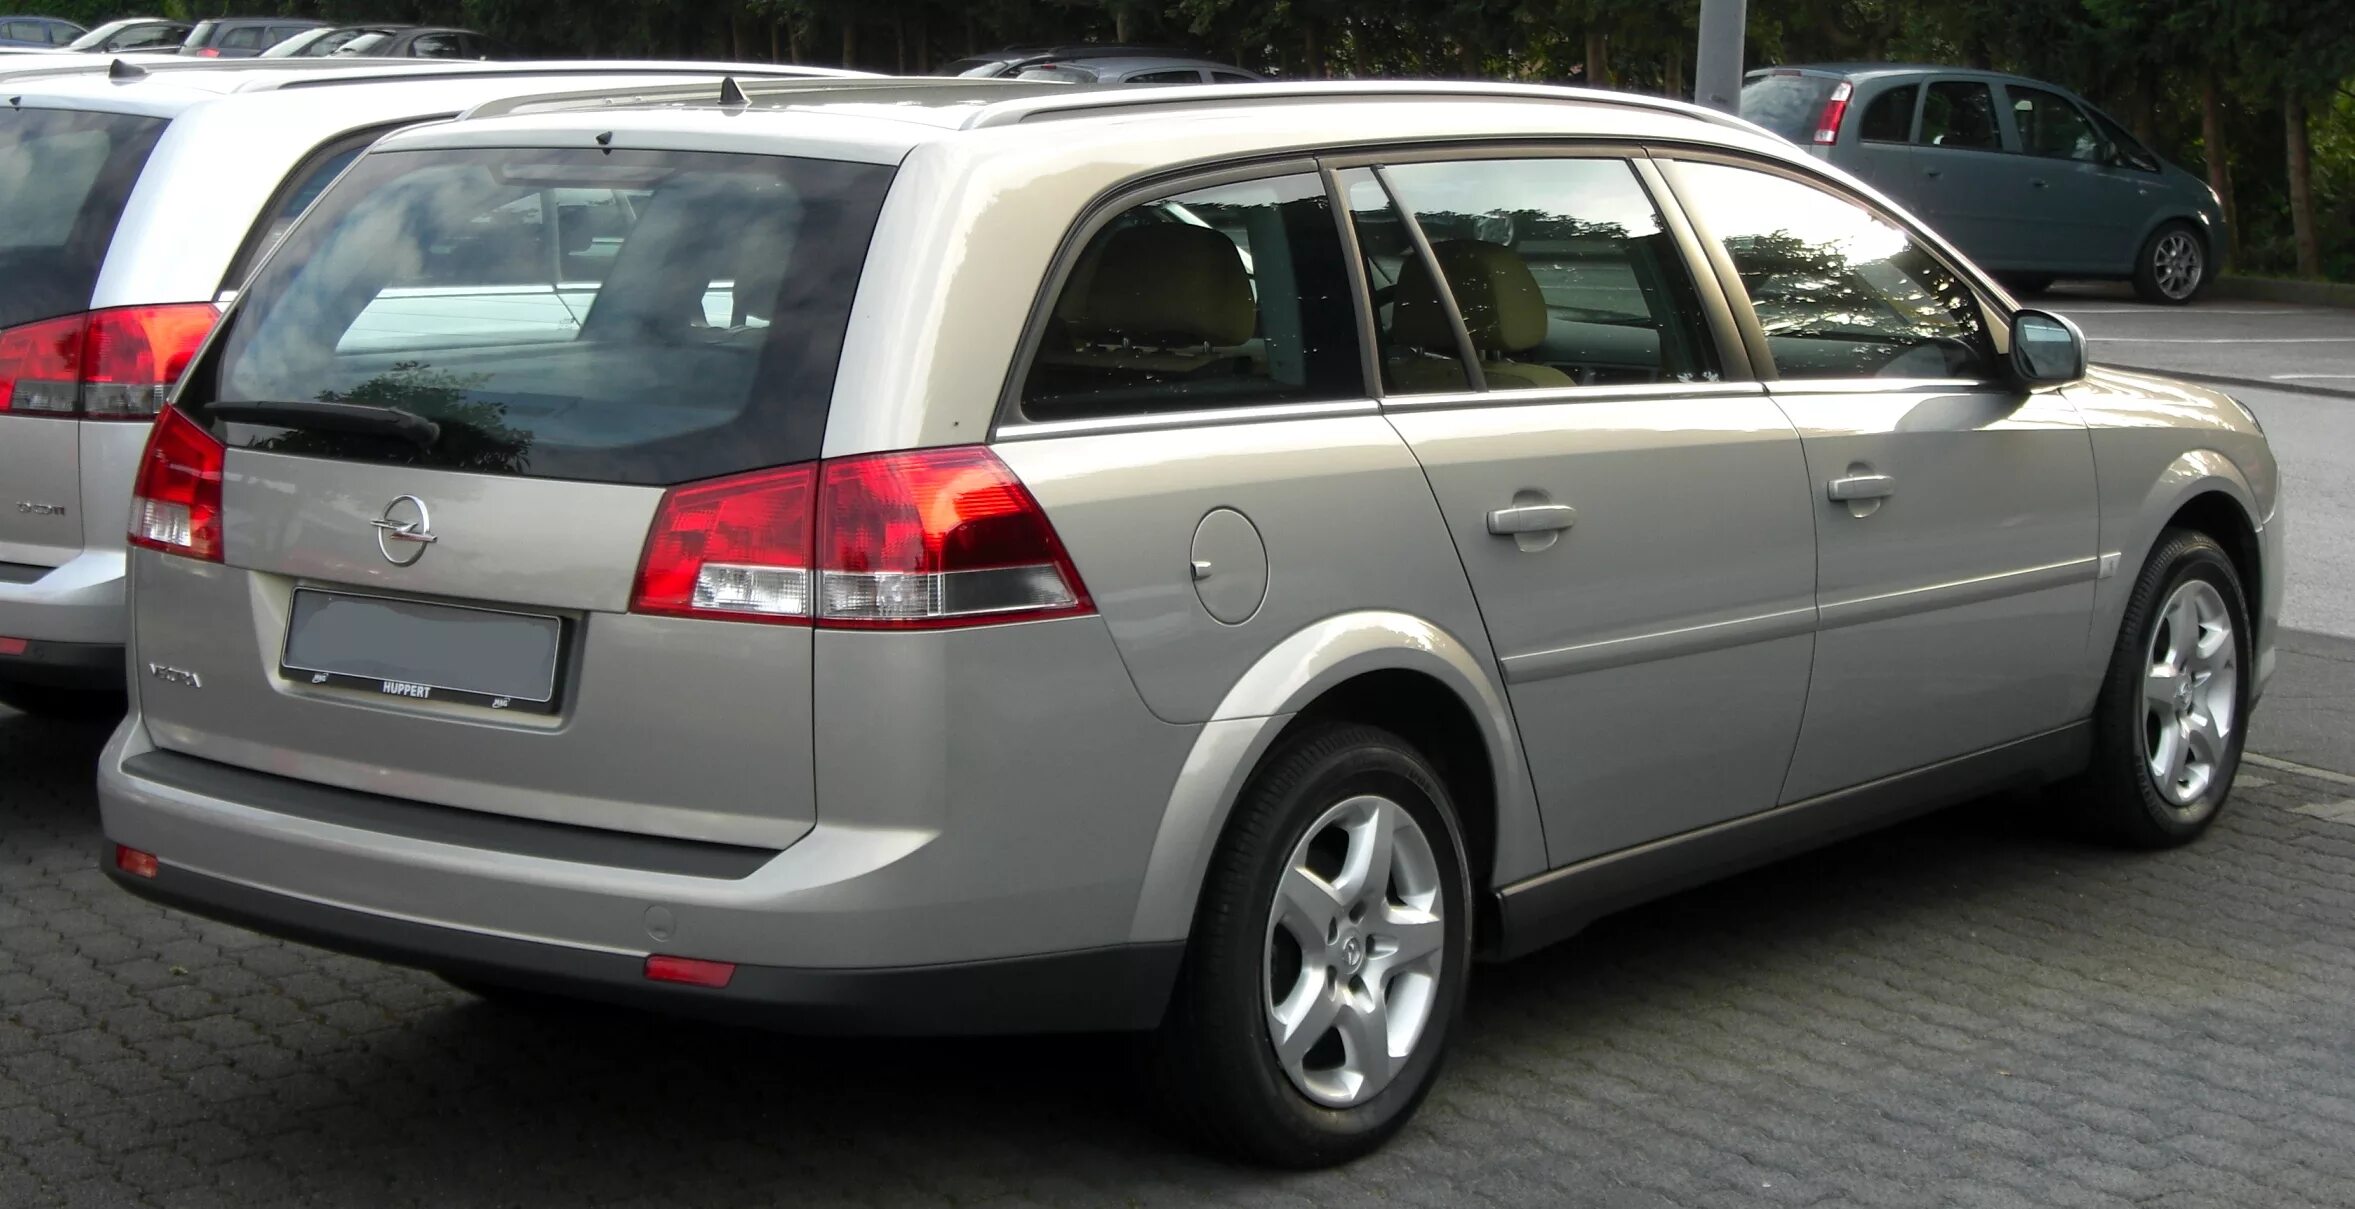 Opel Vectra c 2008 универсал. Опель Вектра Караван 2008. Опель Вектра универсал 2008. Opel Vectra c Caravan. Вектра караван